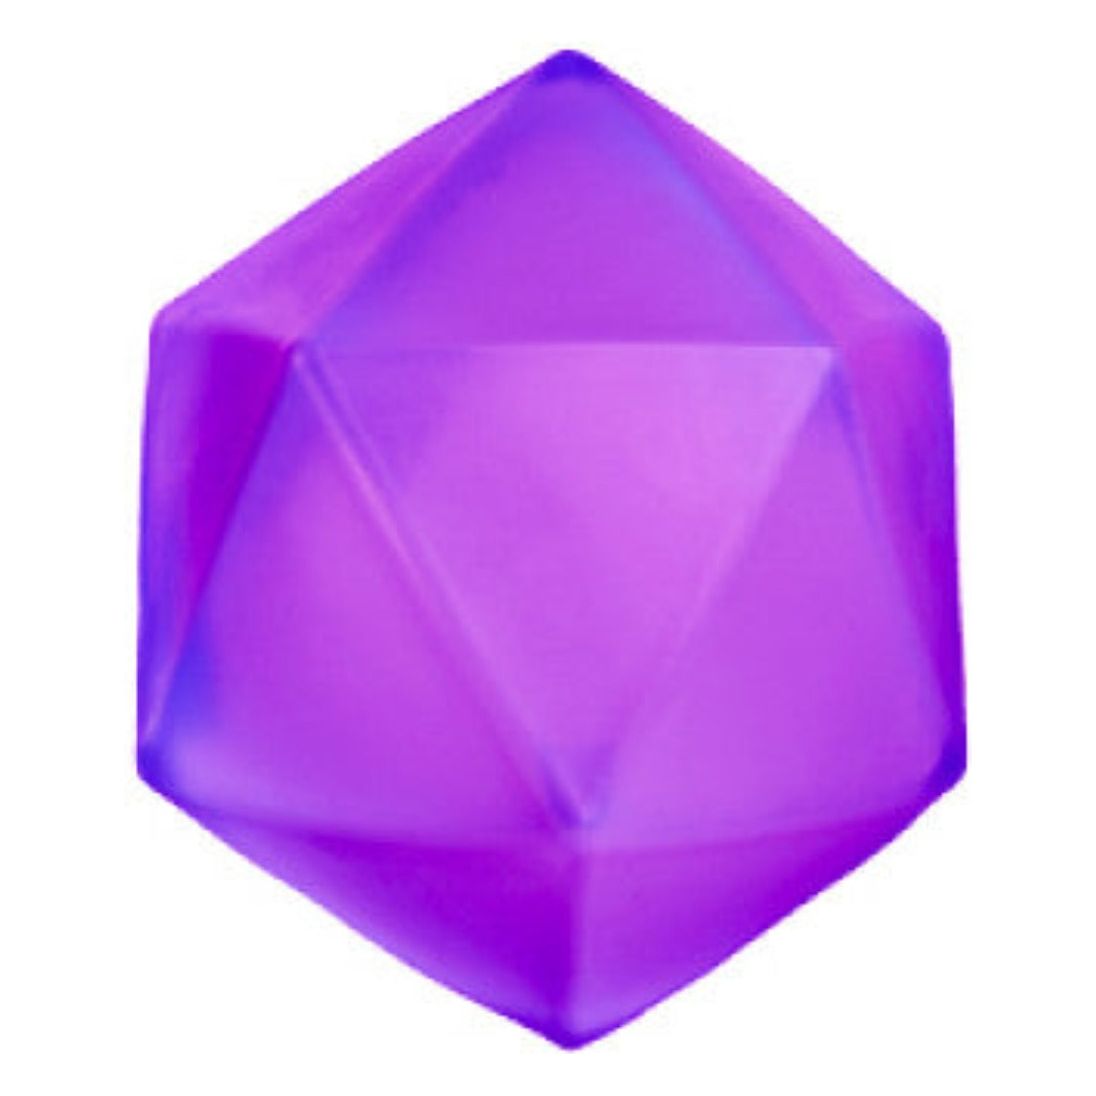 Smoosho's Polyhedron Jelly Cube - Sensory Circle